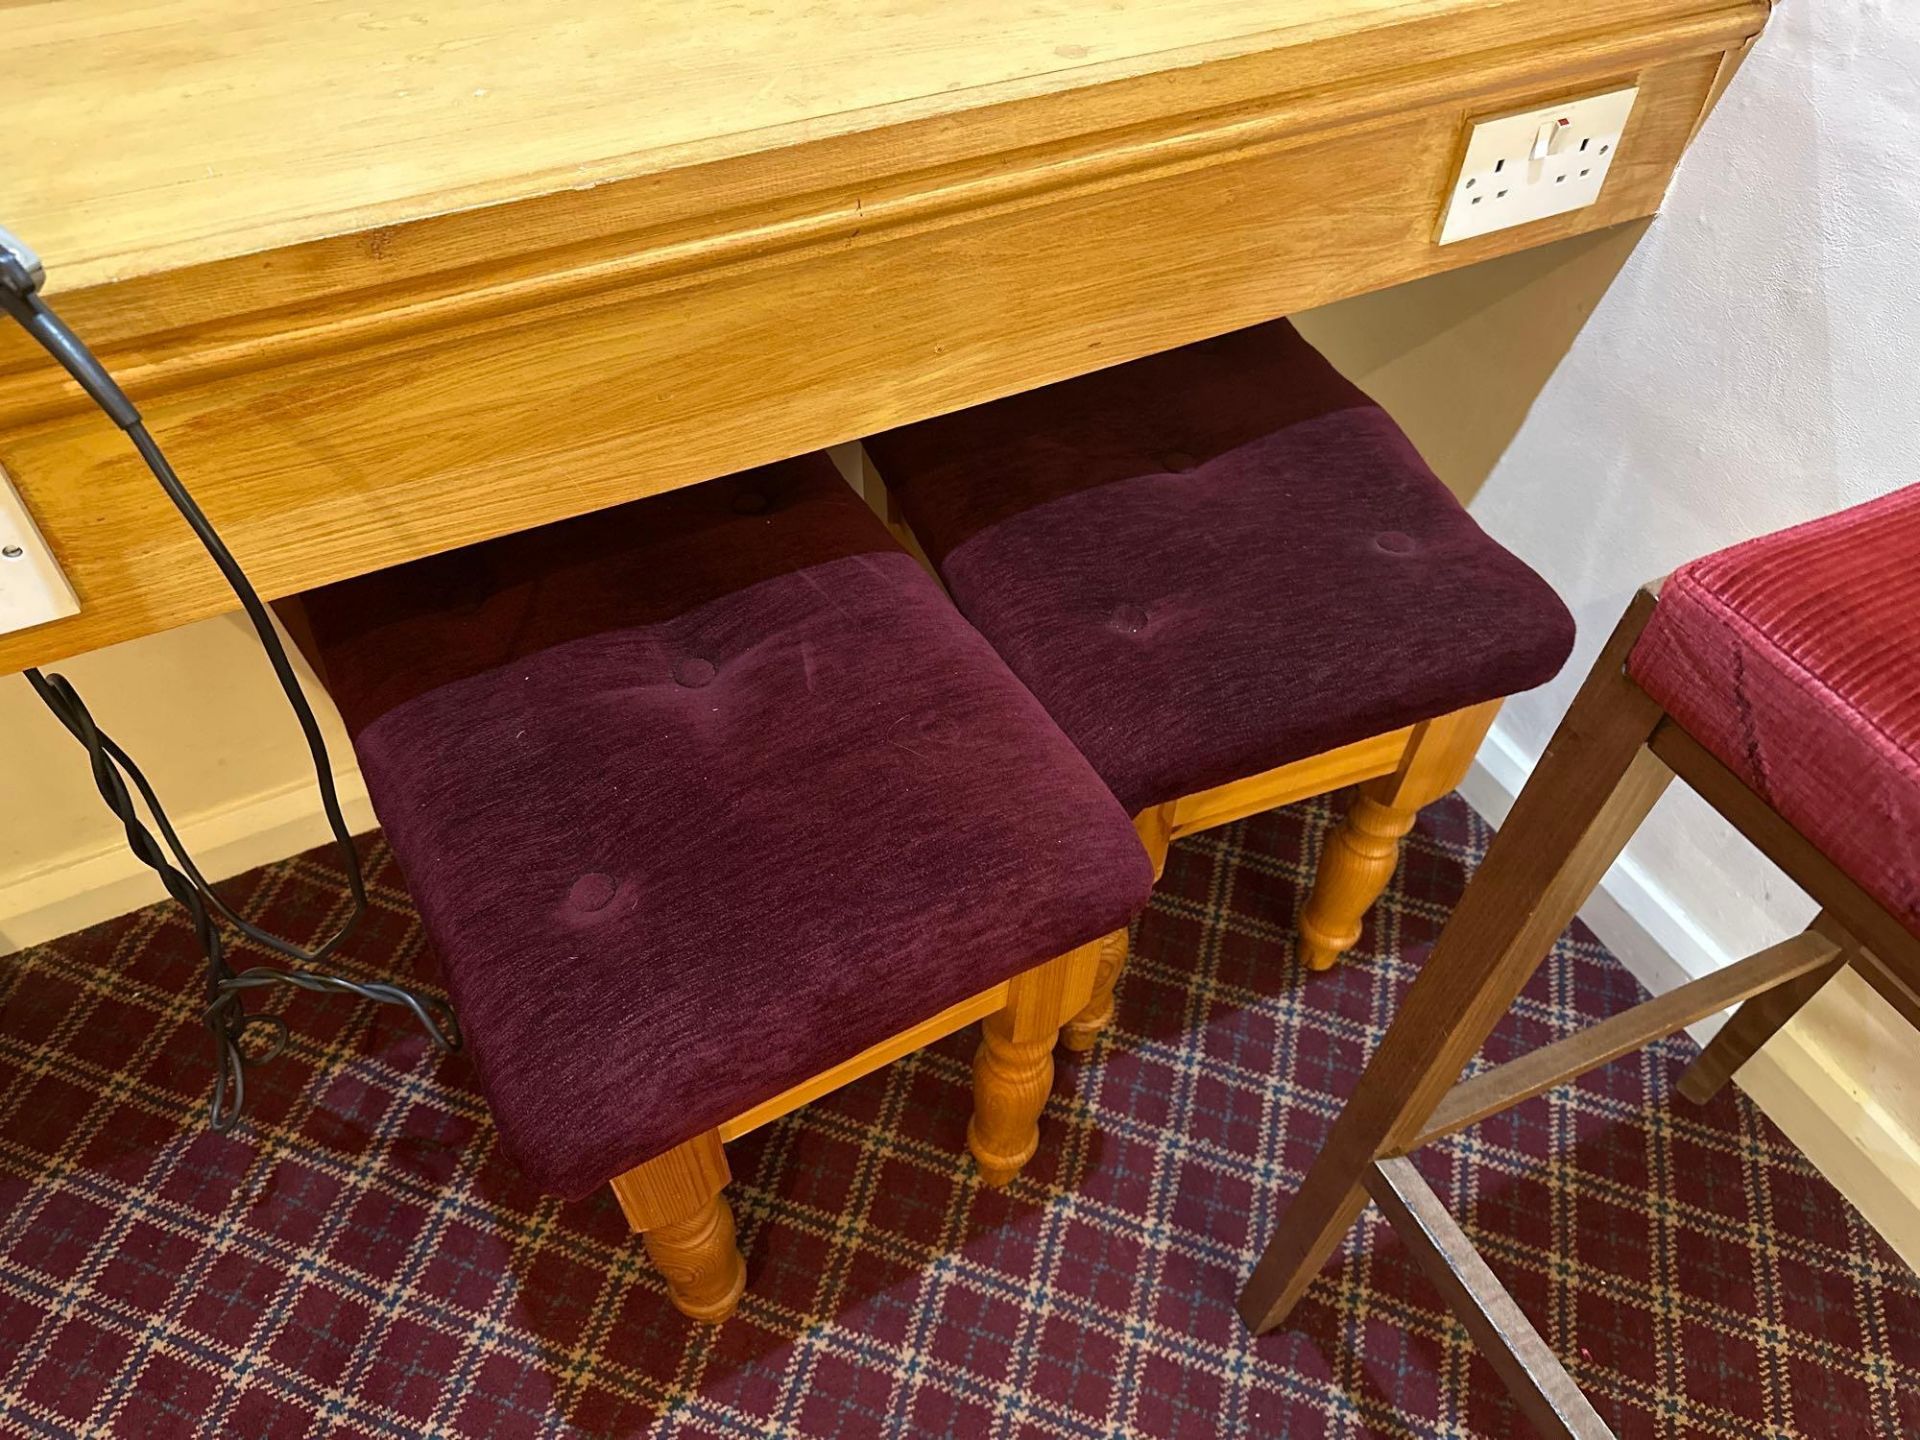 4 x pine upholstered mauve seat pad stools 40 x 55 x 50cm ( Location: ladies locker room ) - Image 4 of 4